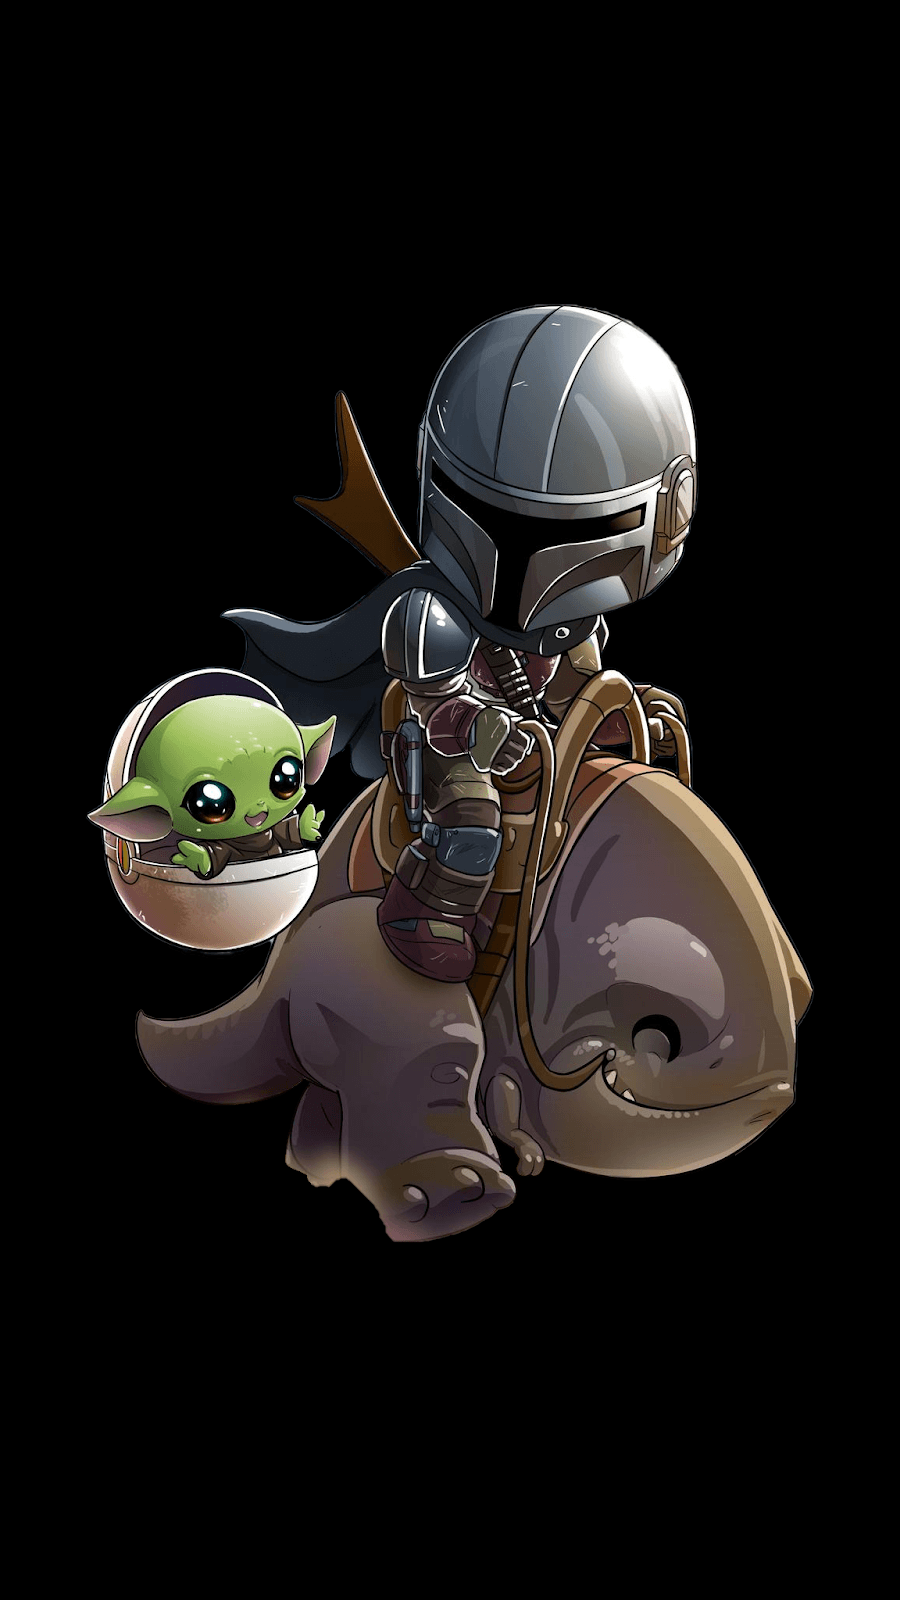 Baby Yoda and Mando. Star wars